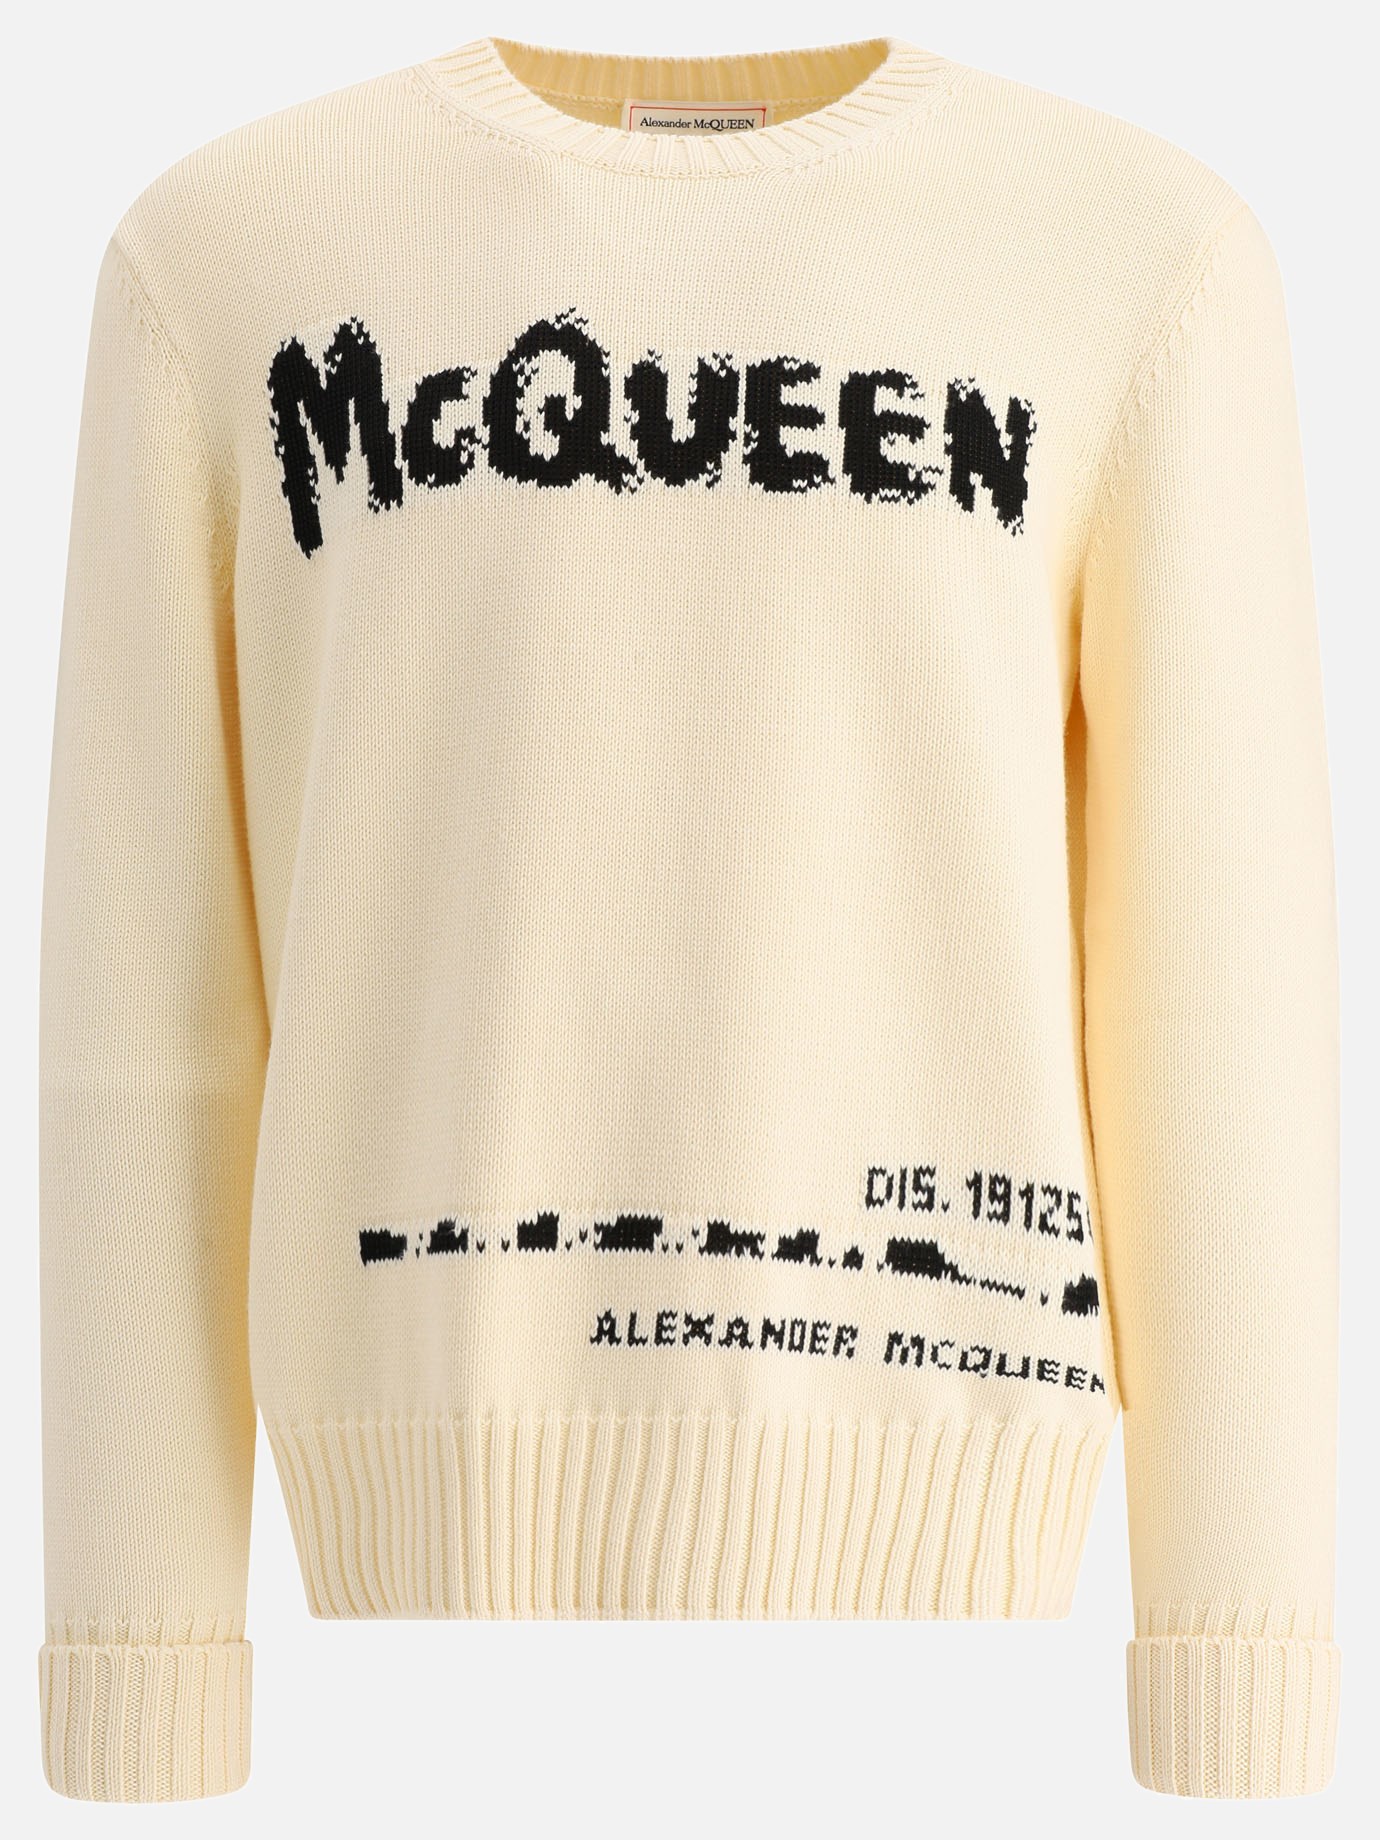  Graffiti  sweater by Alexander McQueen